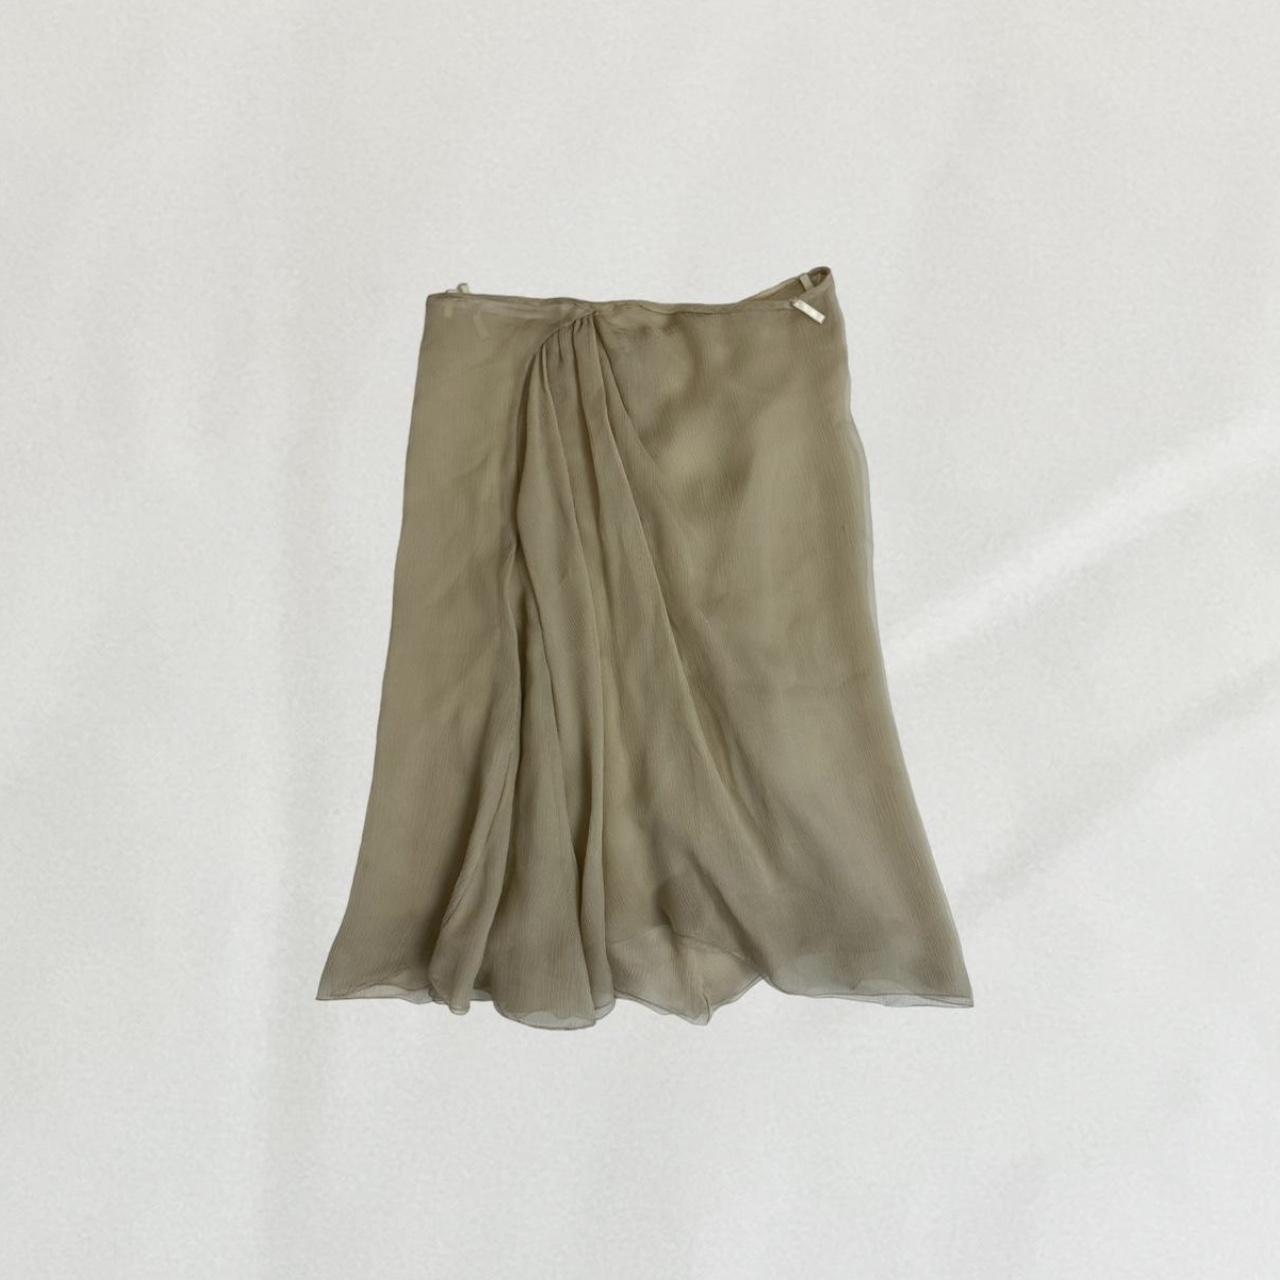 Prada chiffon skirt, sheer ruffle skirt Open to... - Depop